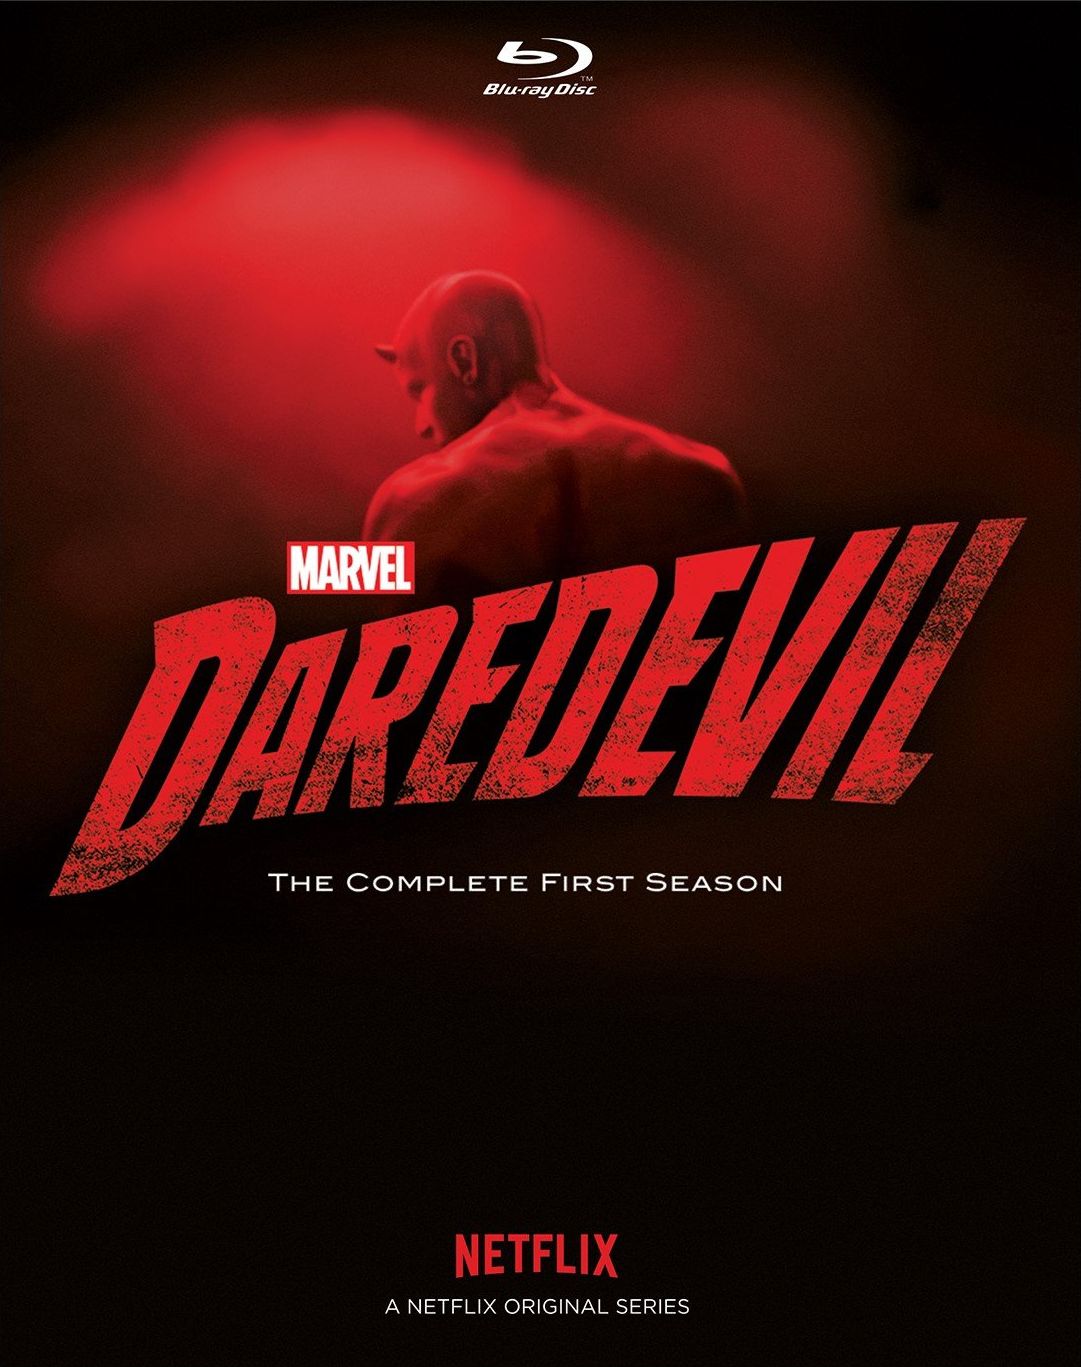 Daredevil release date